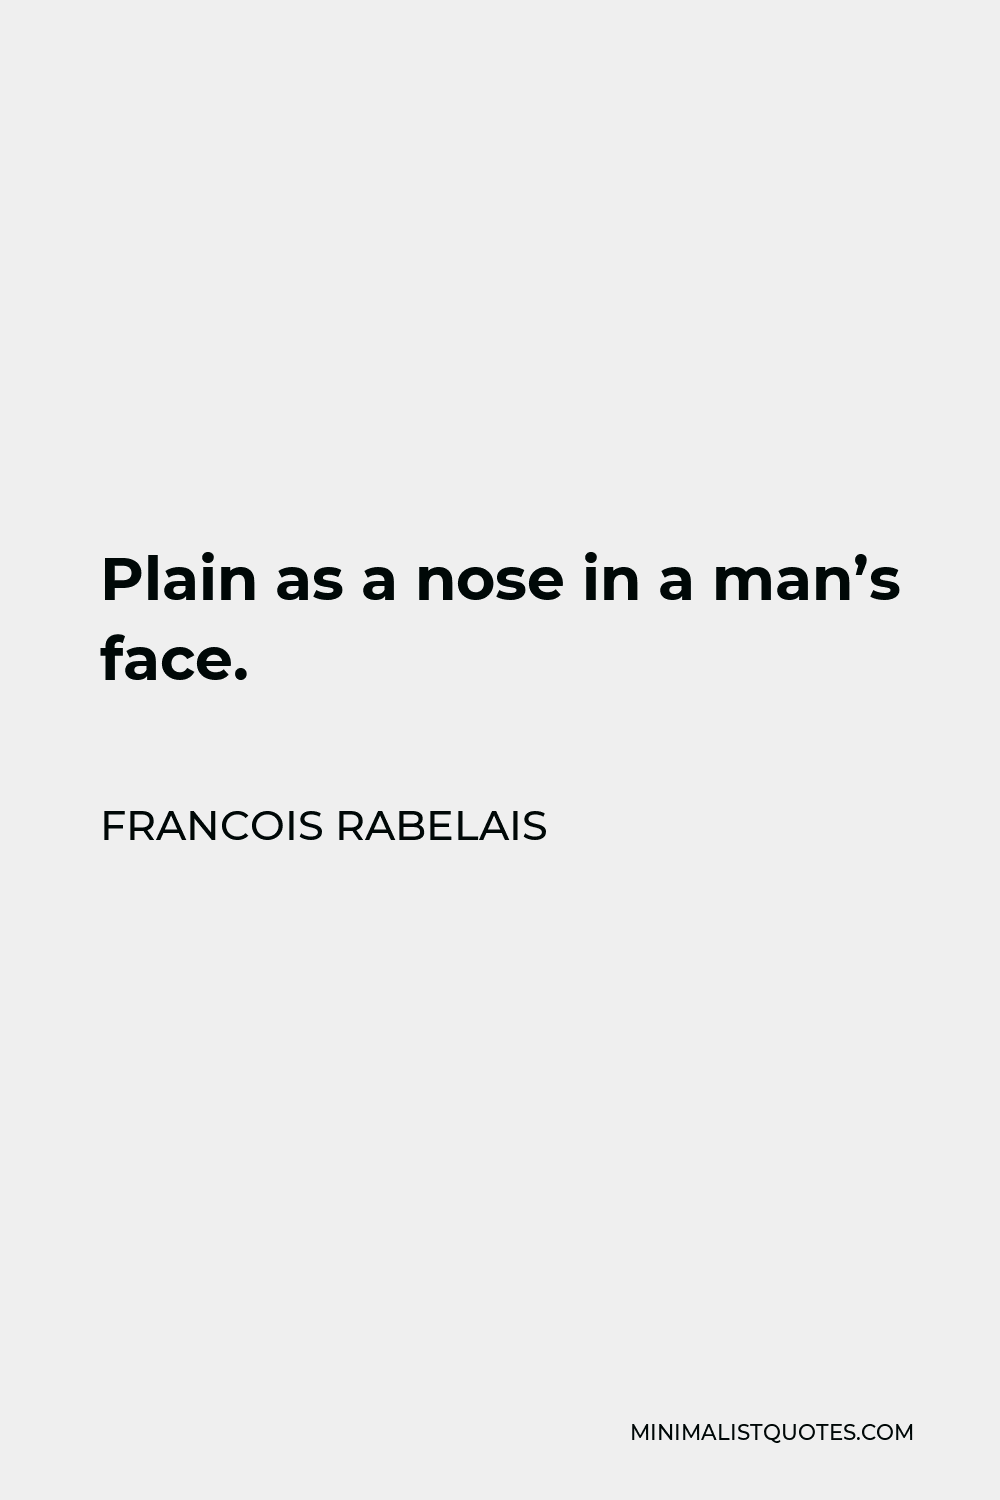 Francois Rabelais Quote - Plain as a nose in a man’s face.